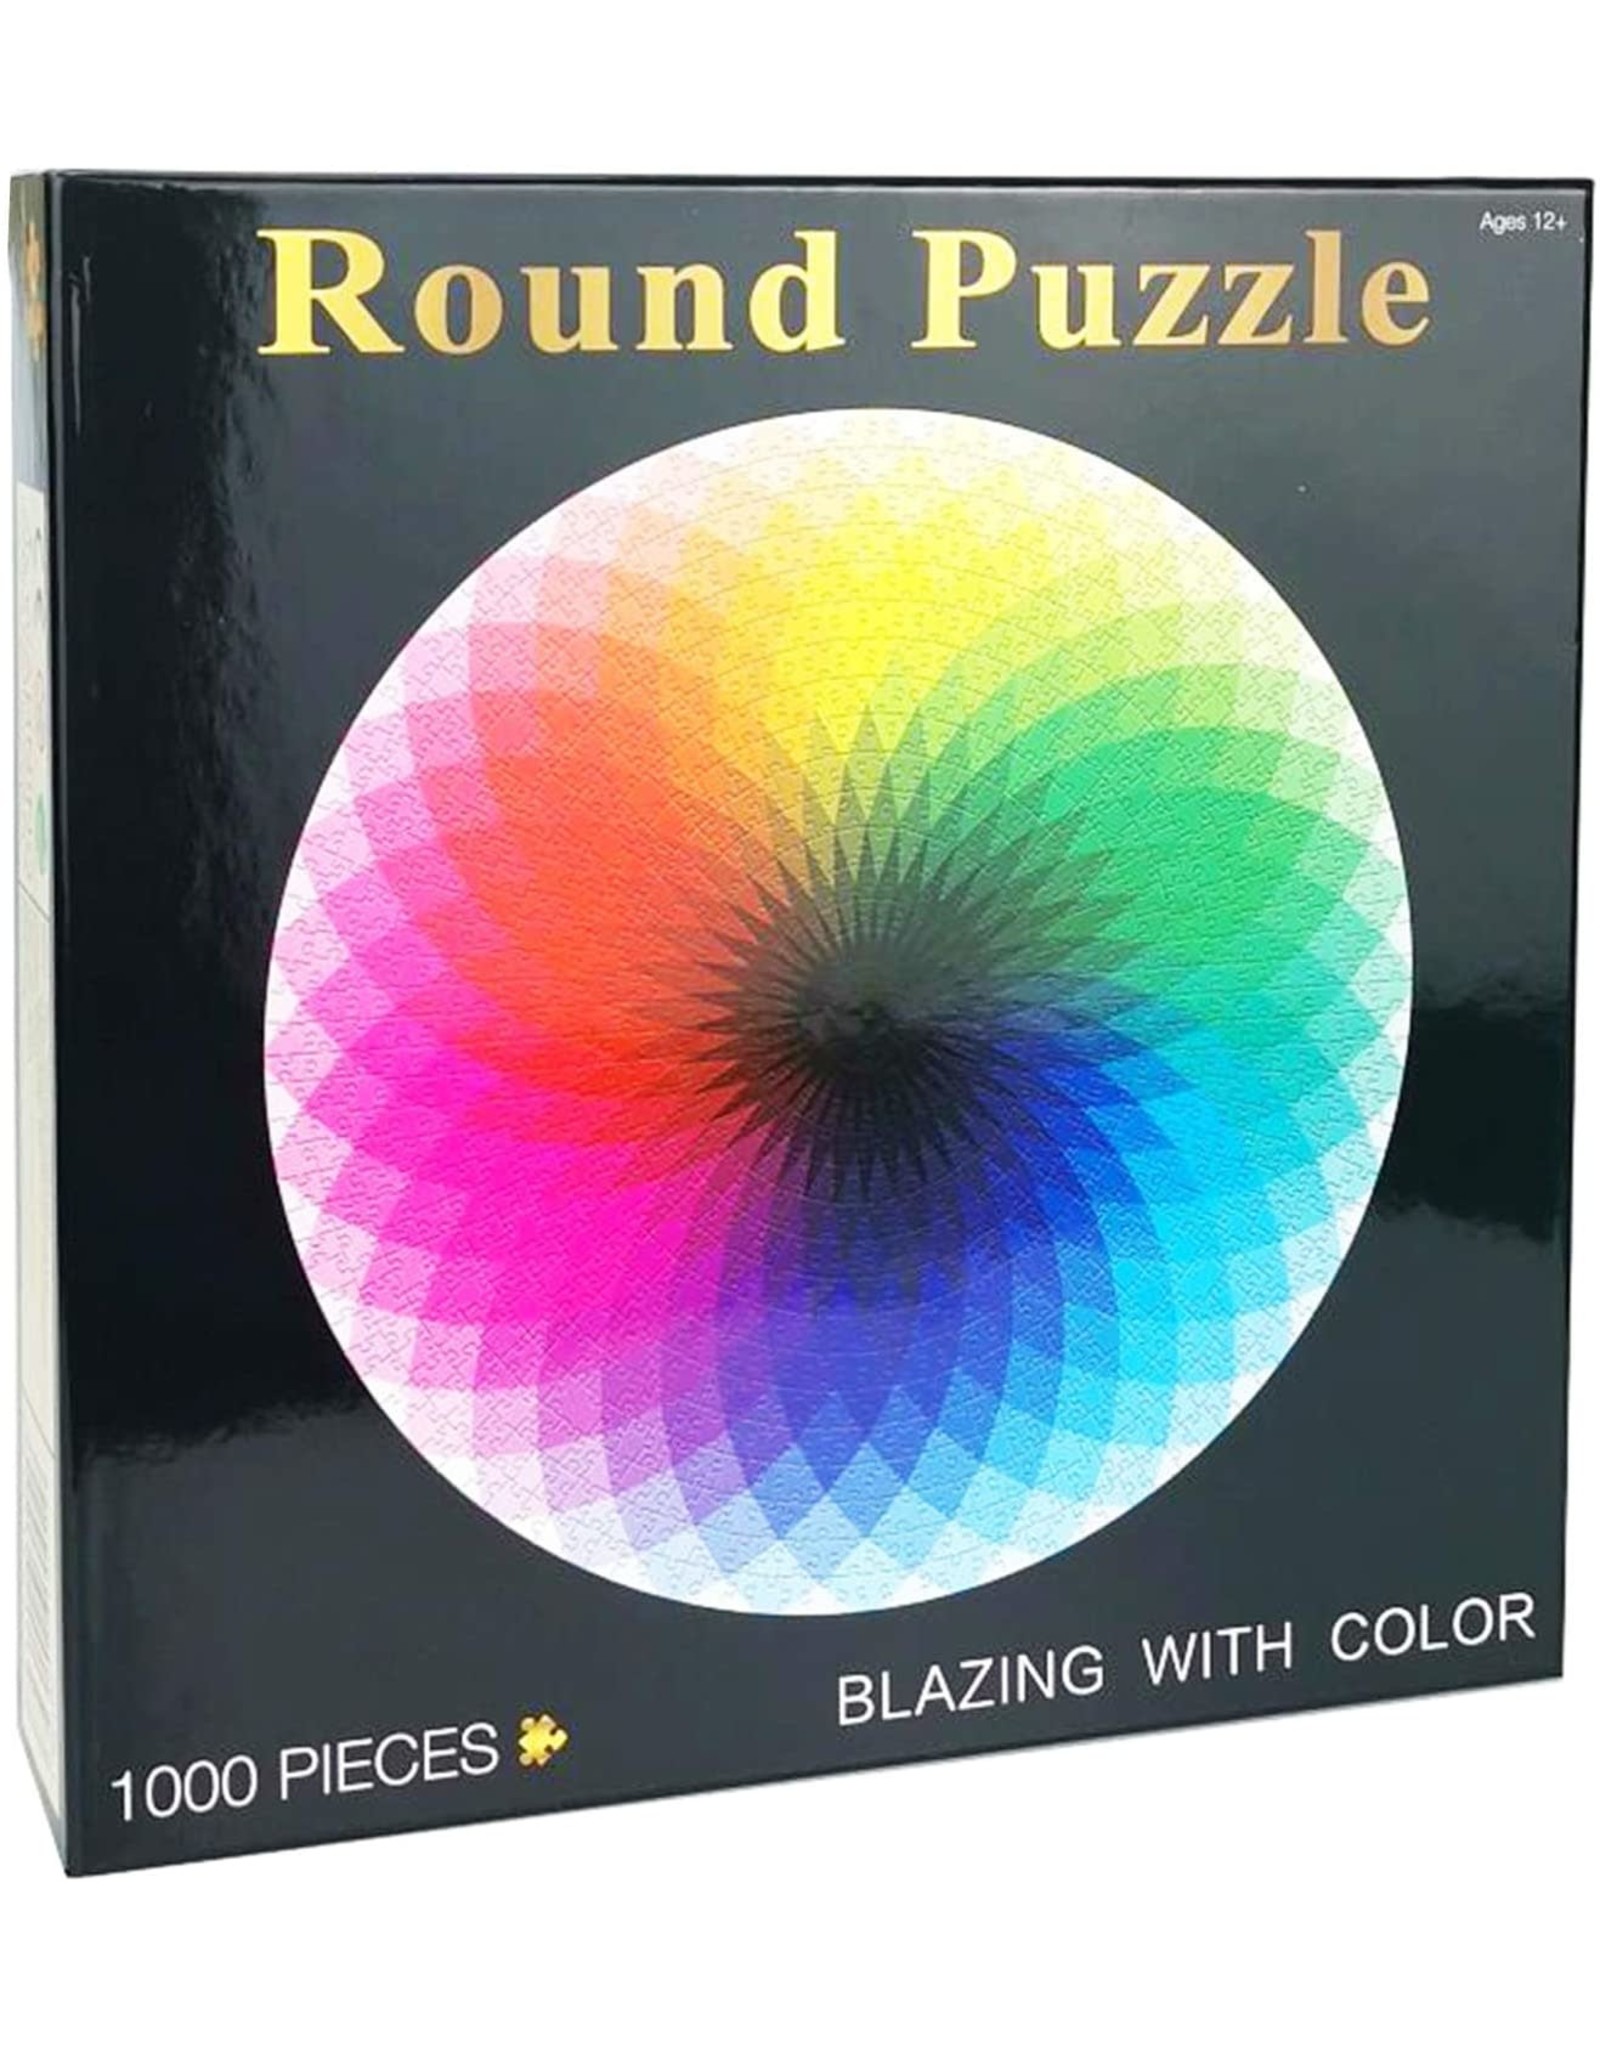 Rainbow Round Puzzle 1000pcs